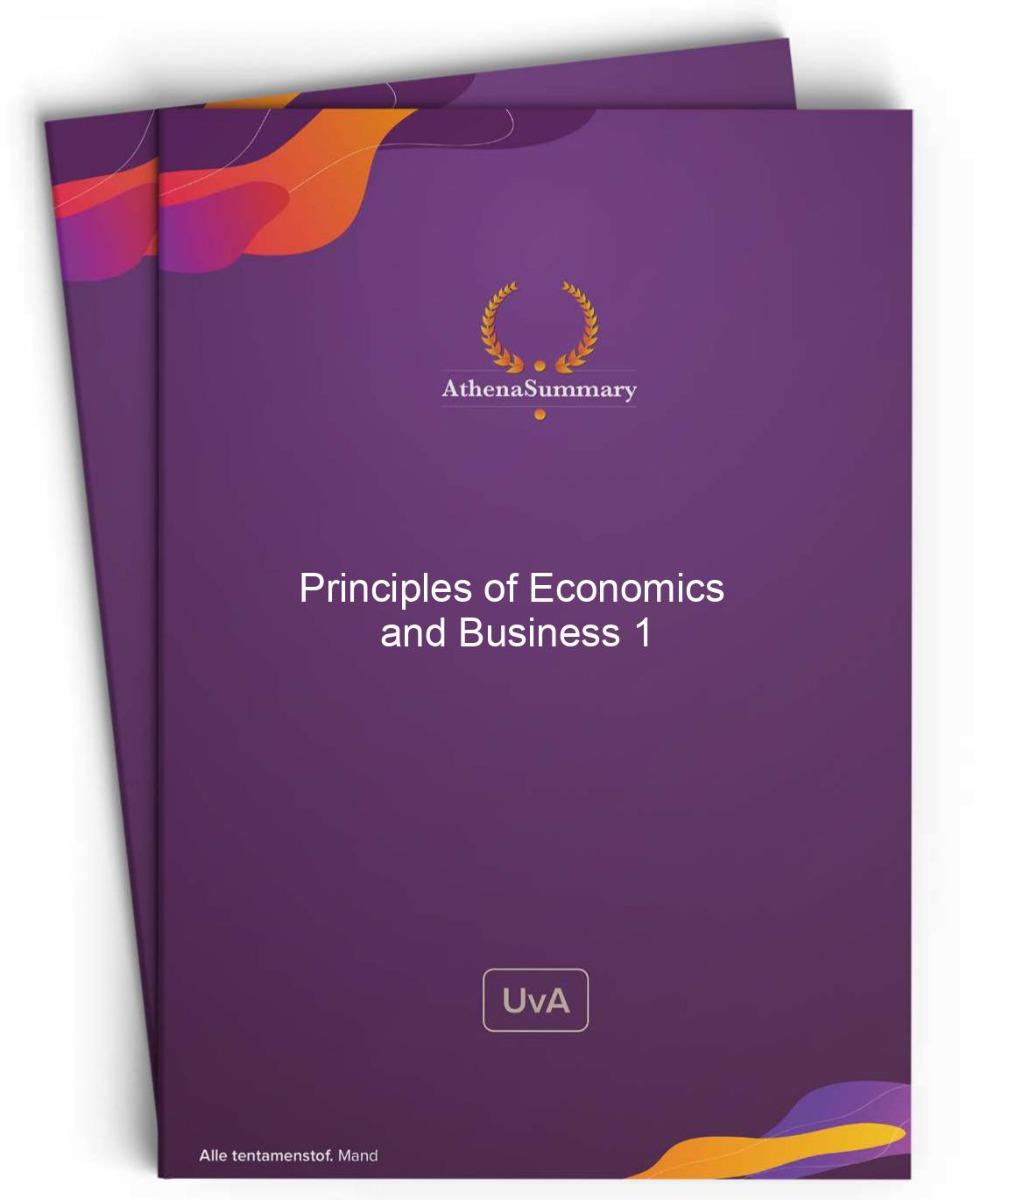 Literature Summary: Principles of Economics and Business 1